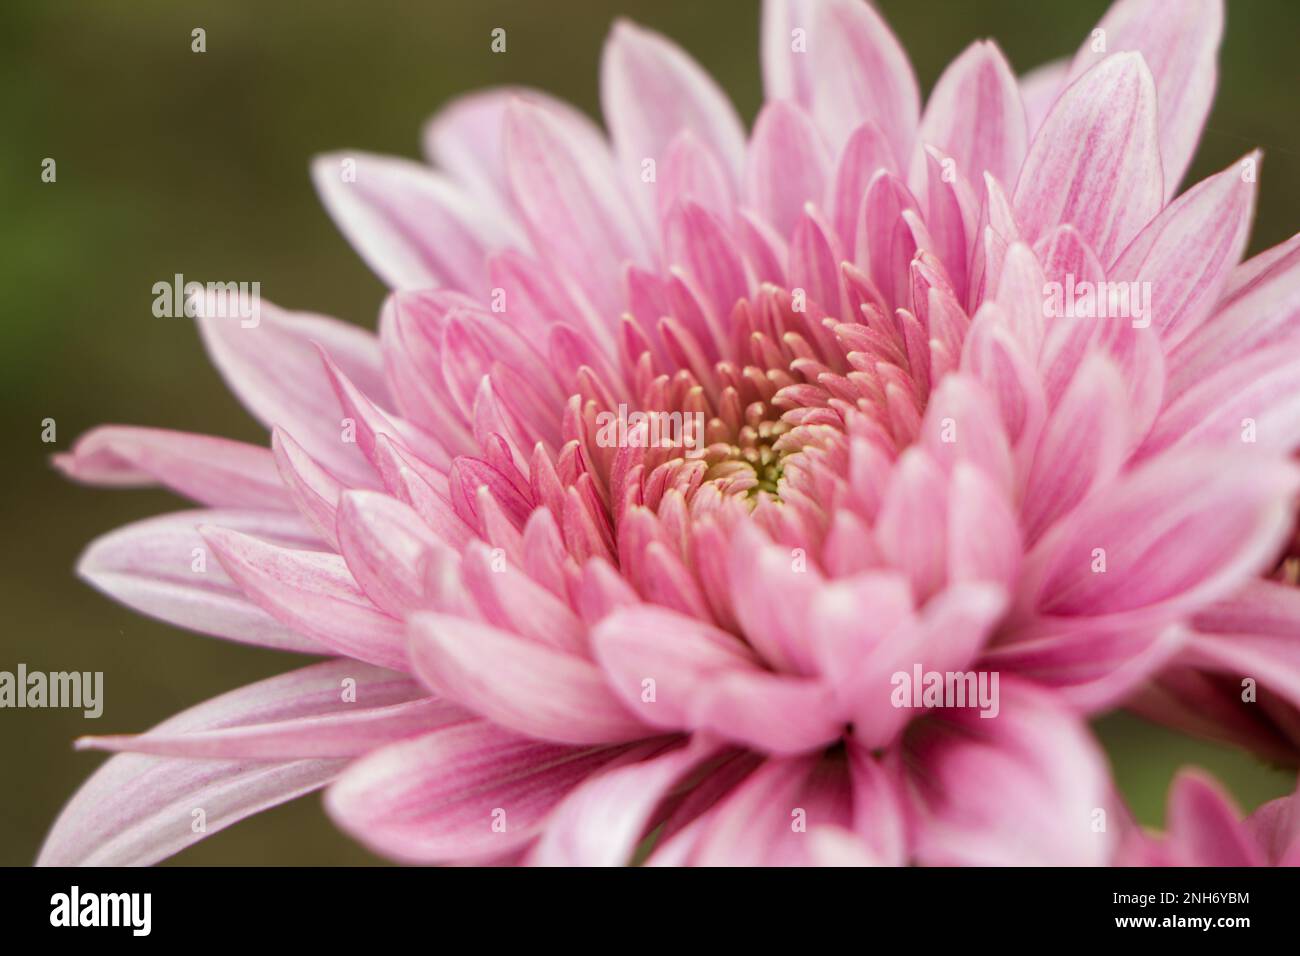 Closeup details of pink chrysanthemum flower Stock Photo